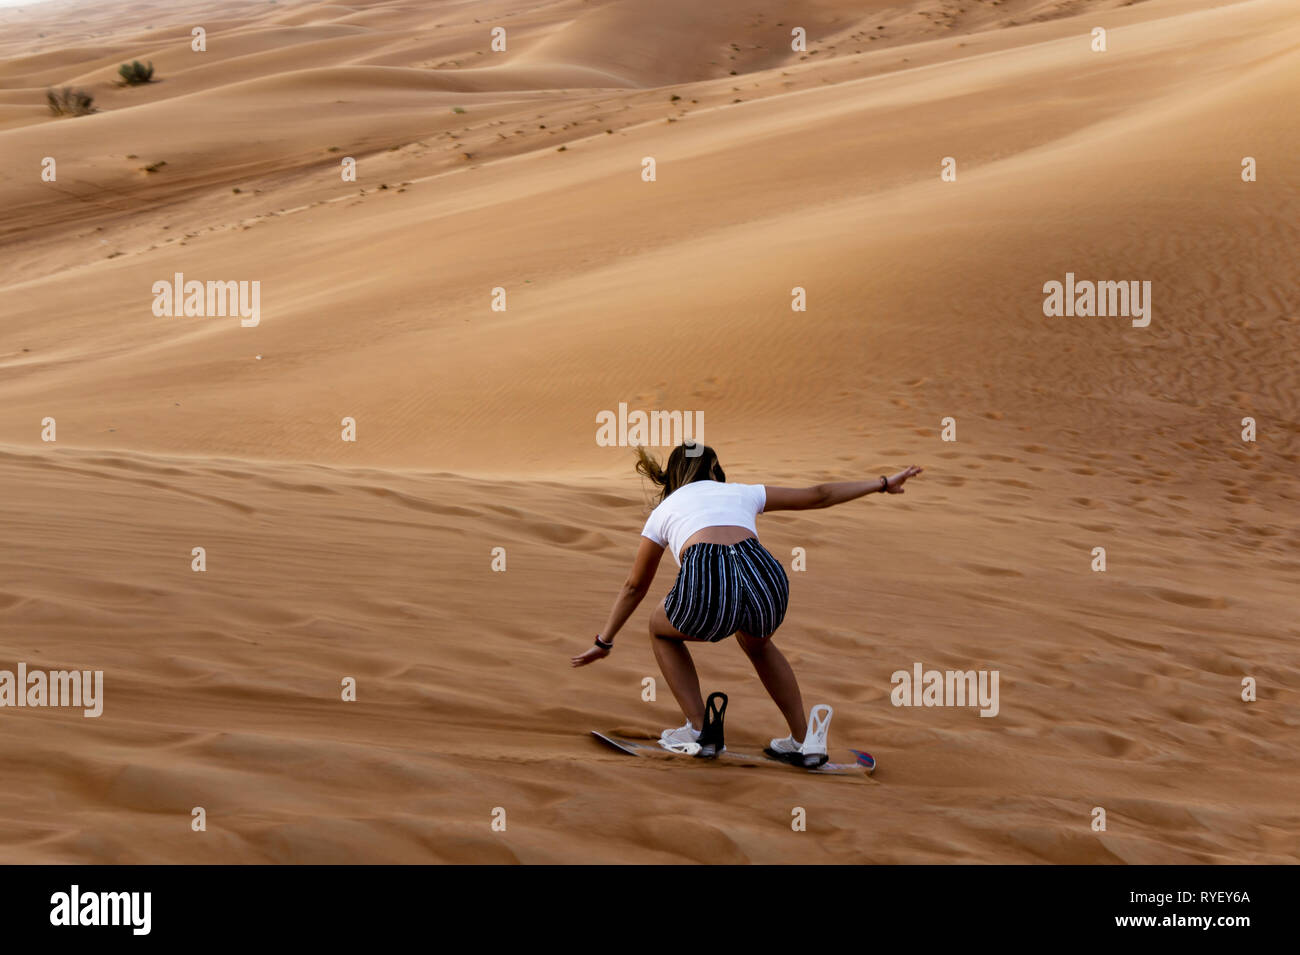 Young girl sandboarding in the desert - extreme desert activity in Dubai Stock Photo